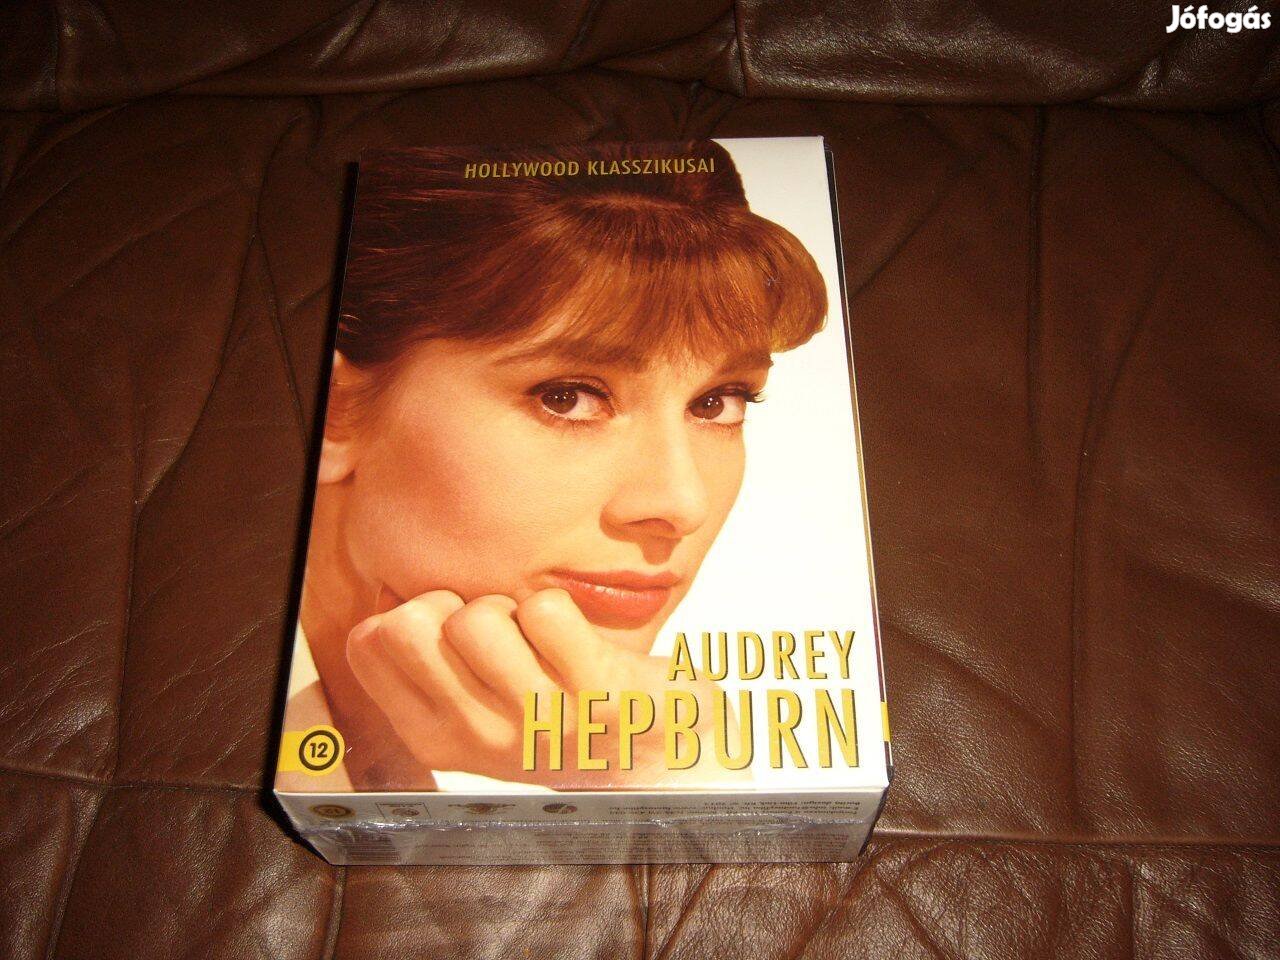 Audrey Hepburn . 4 dvd-s Díszdoboz + 1db film új !